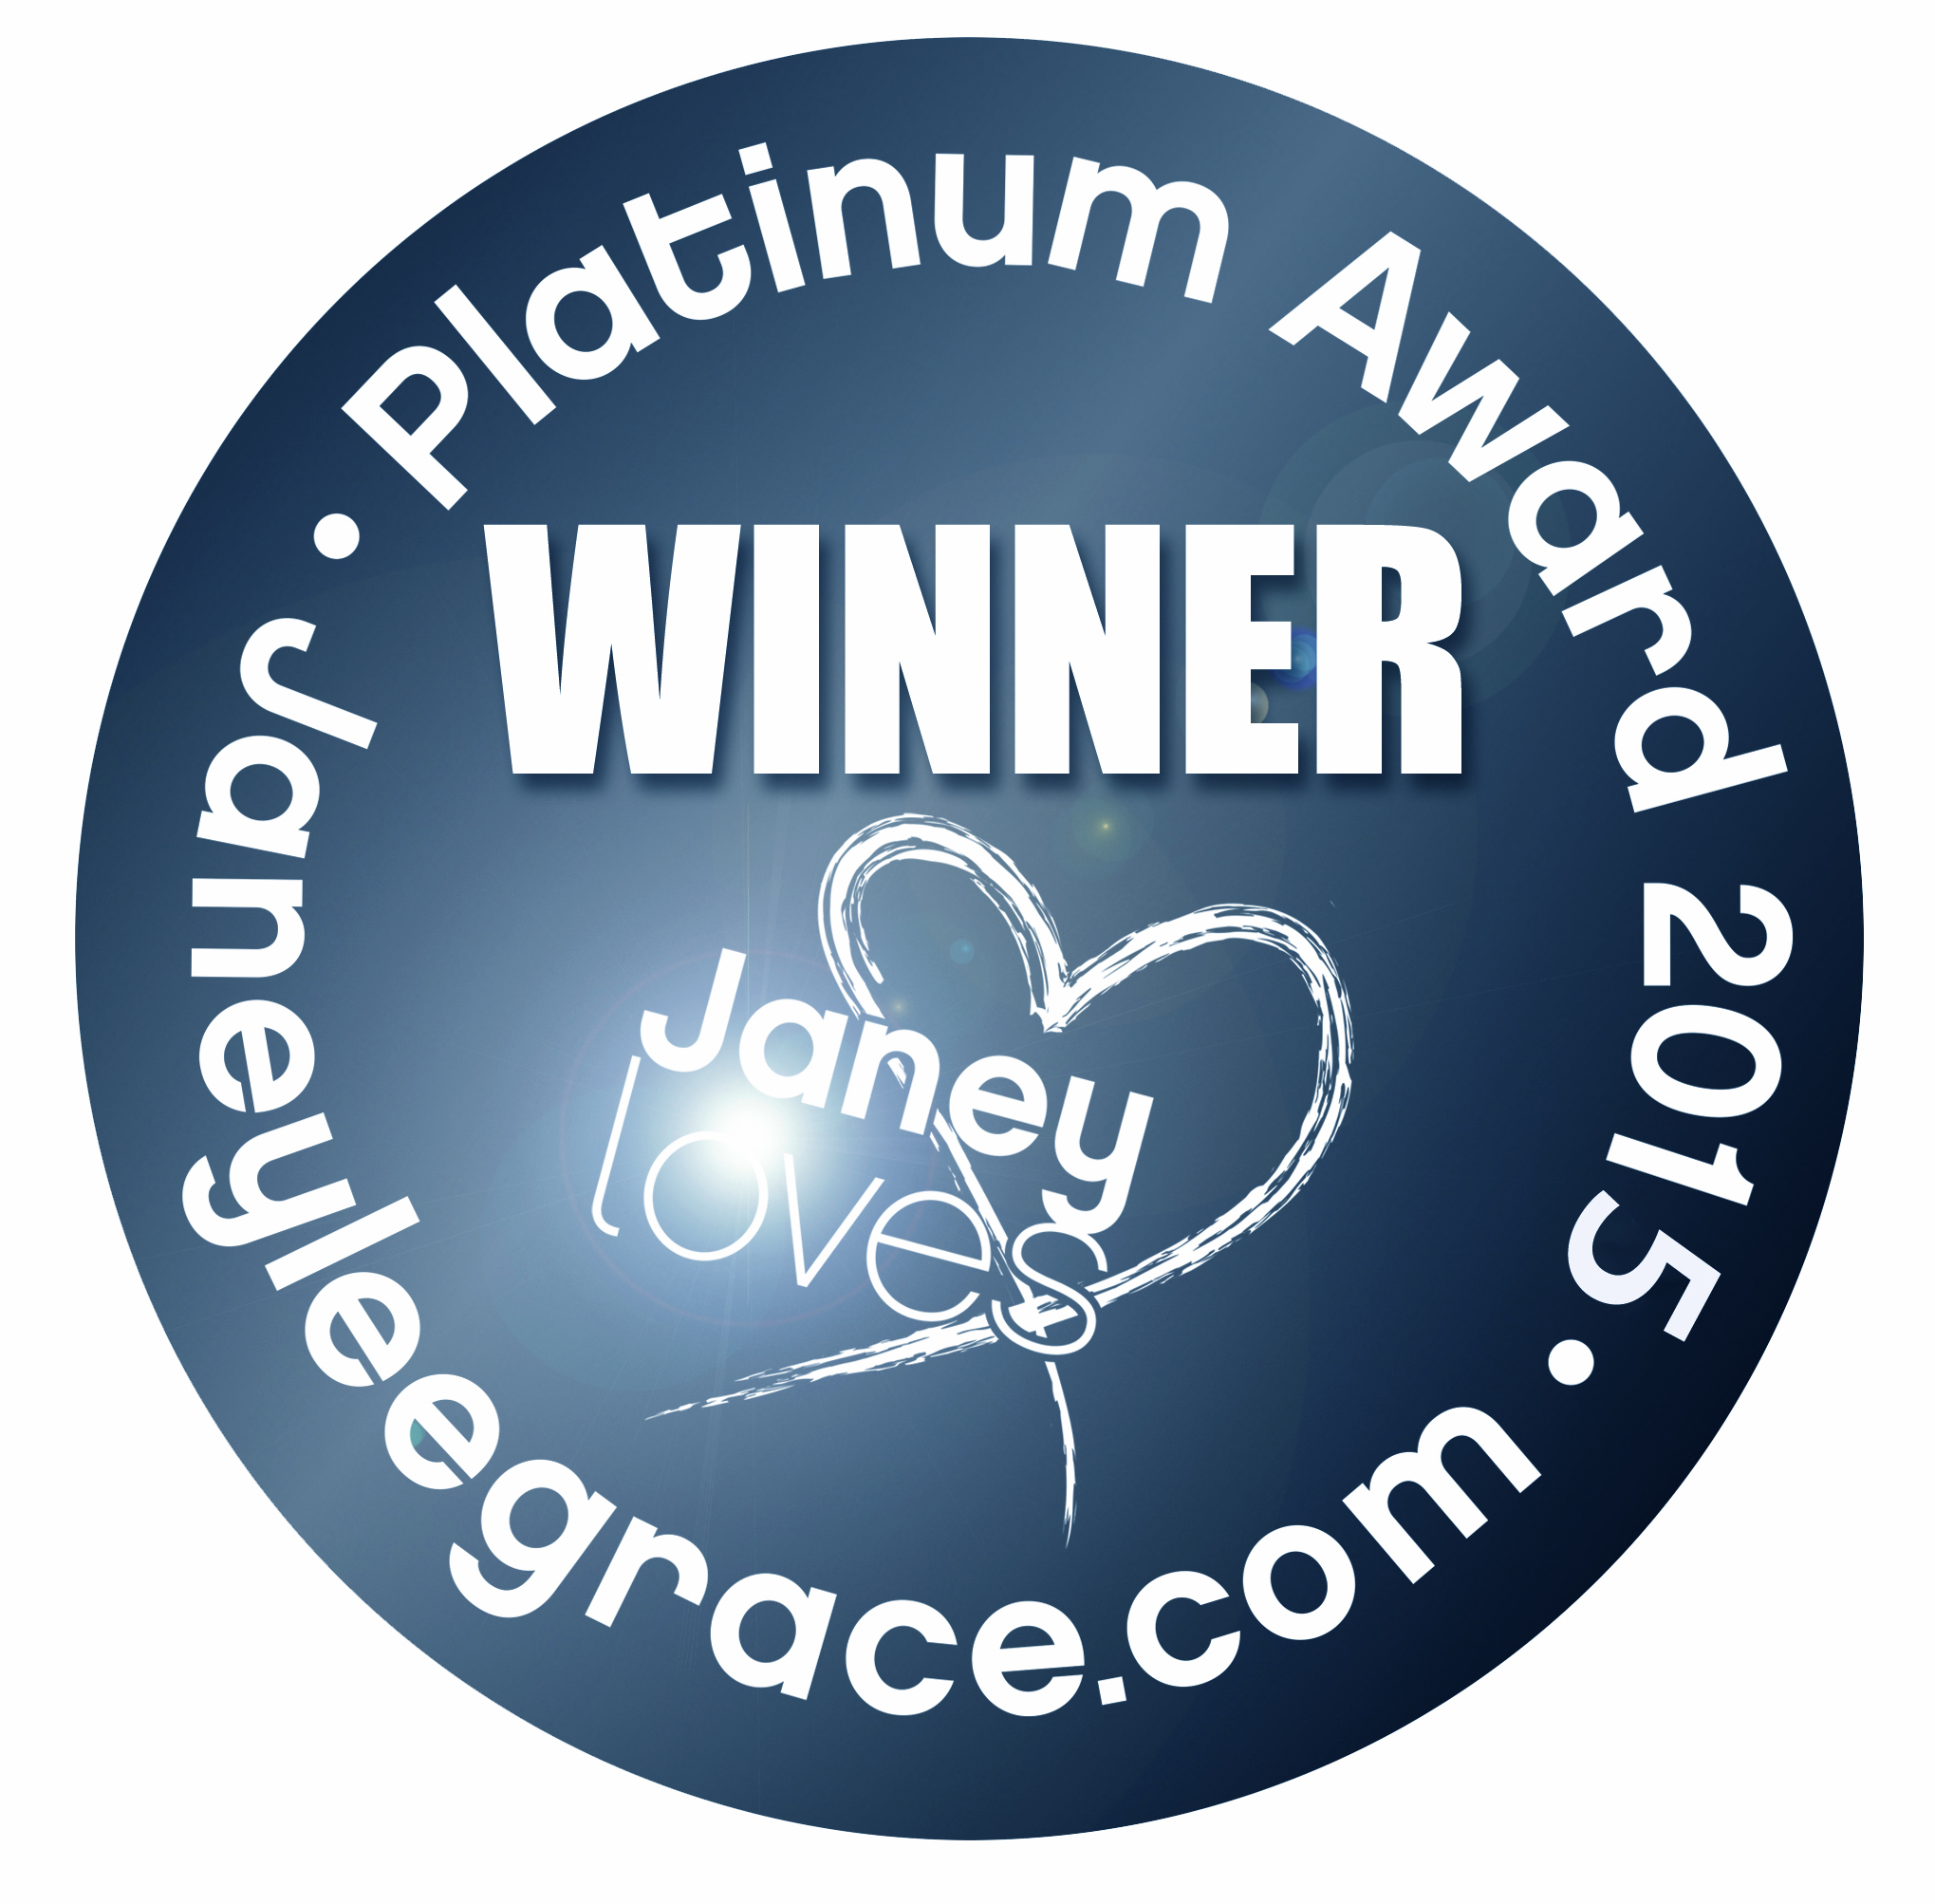 Green 8 Premium Harmoniser - Janey Lee Grace 2015 Platinum Award